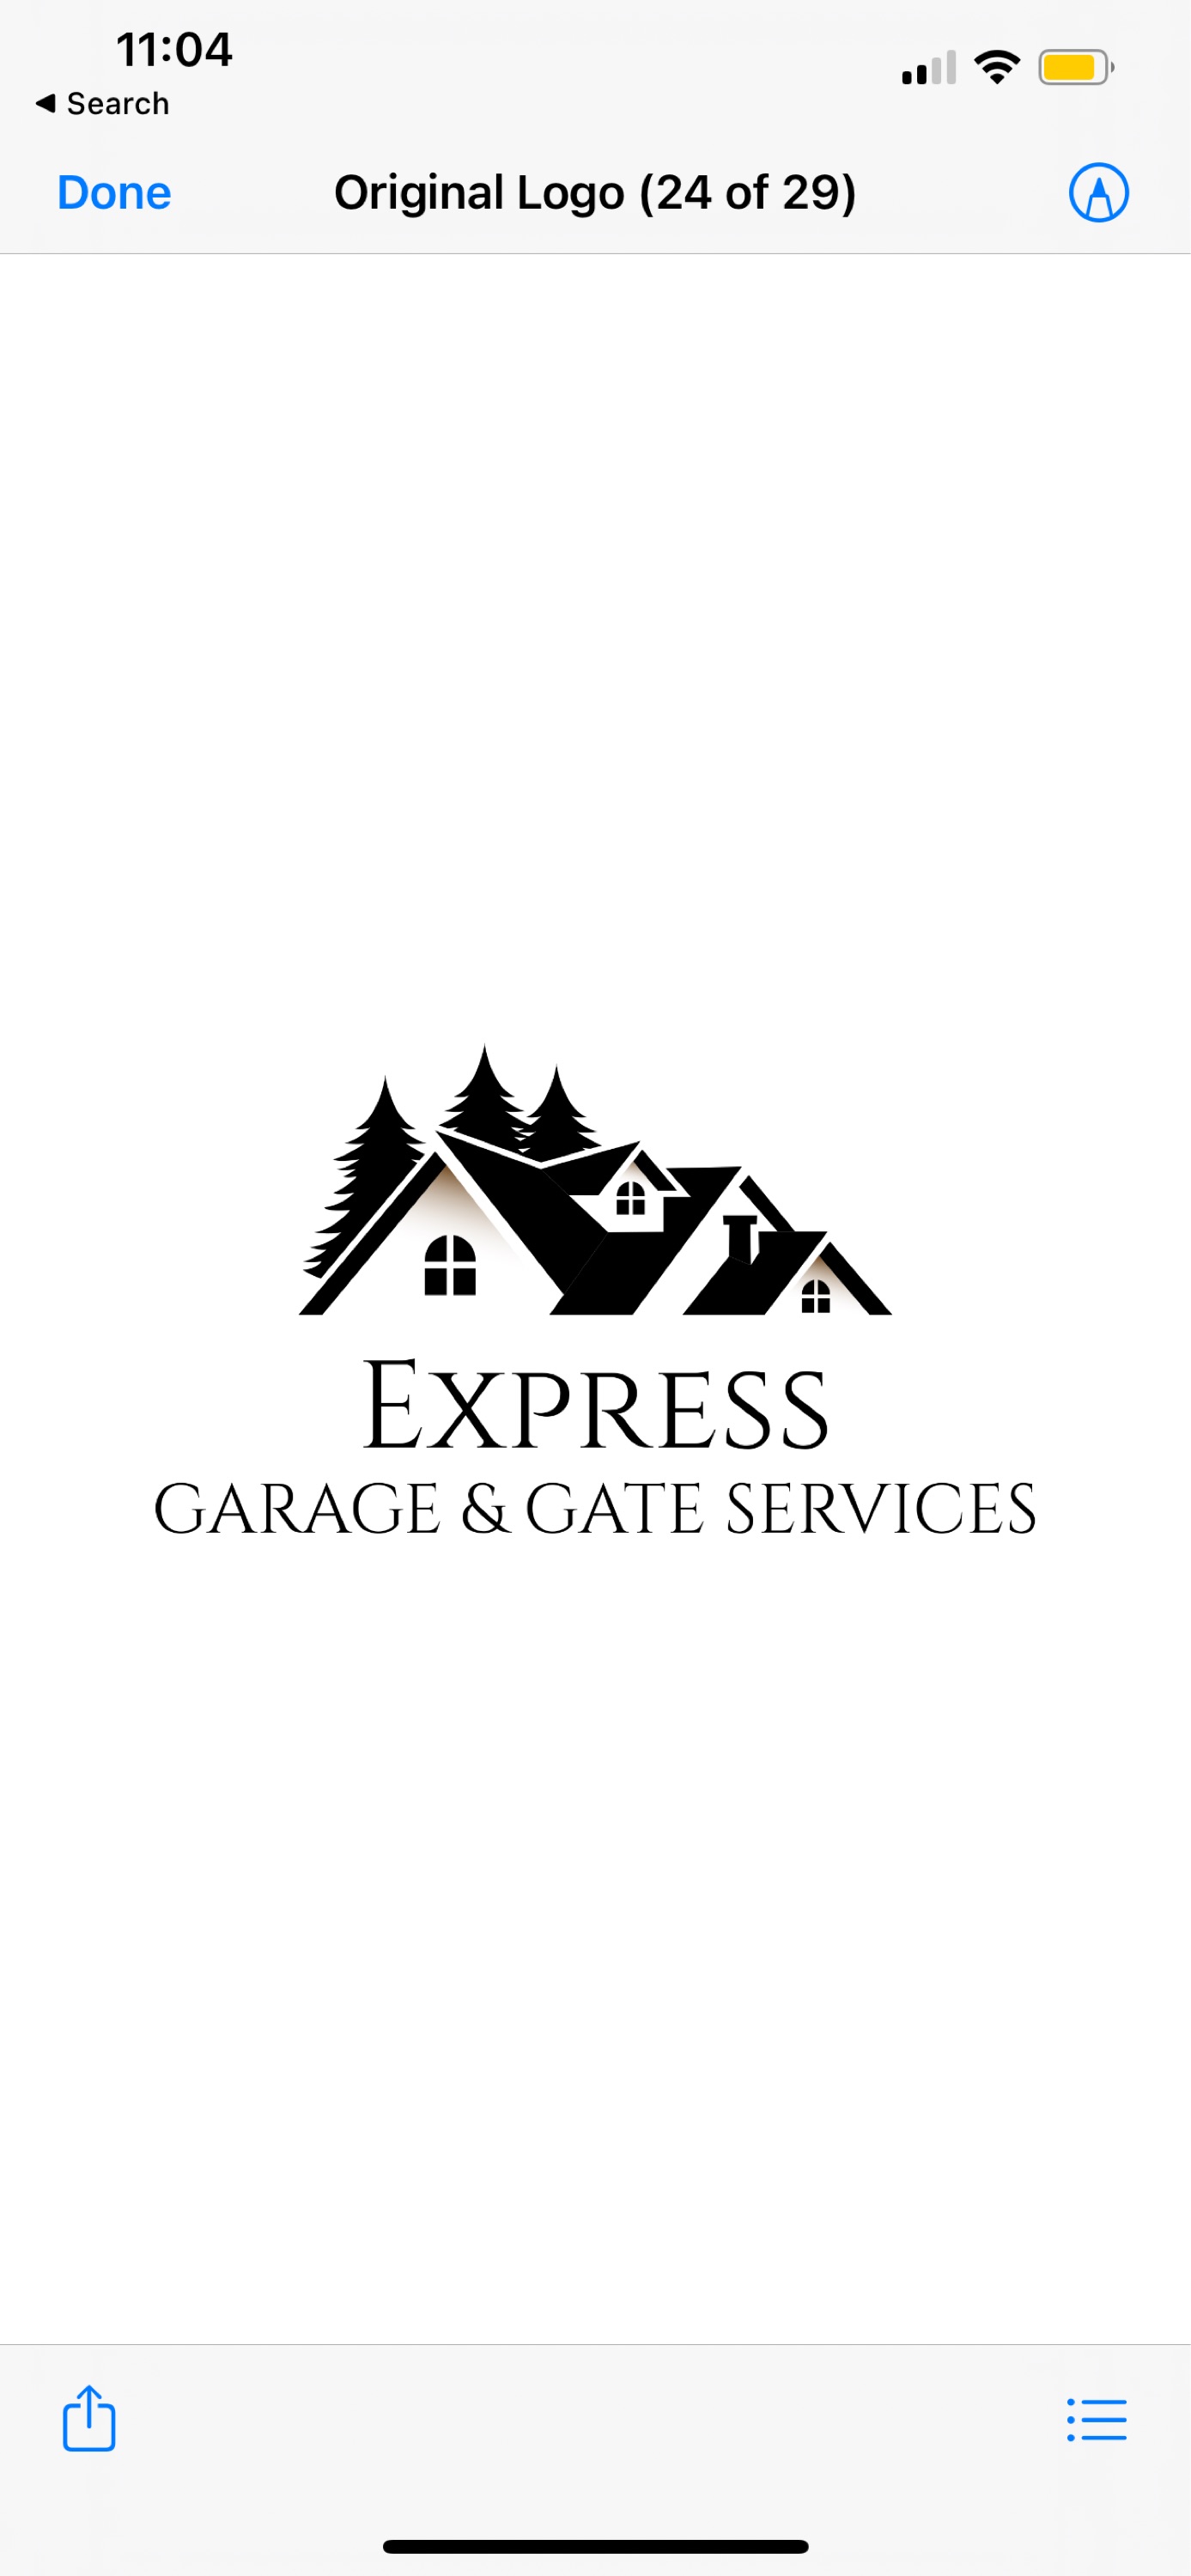 Express Garage & Gate Services Logo